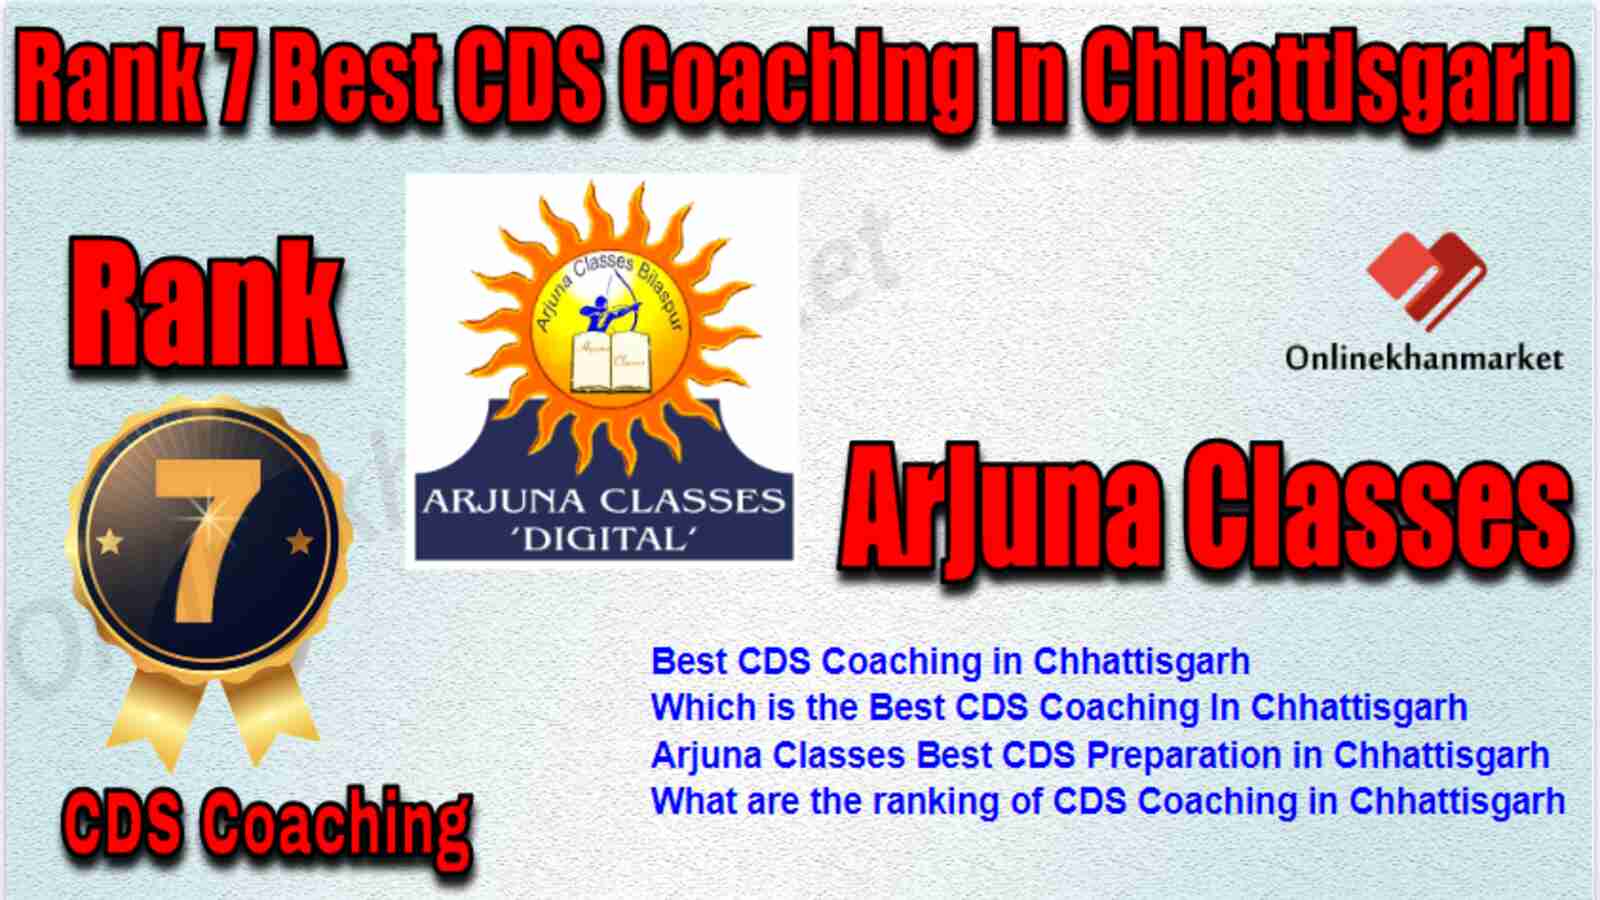 Rank 7 Best CDS Coaching in Chhattisgarh